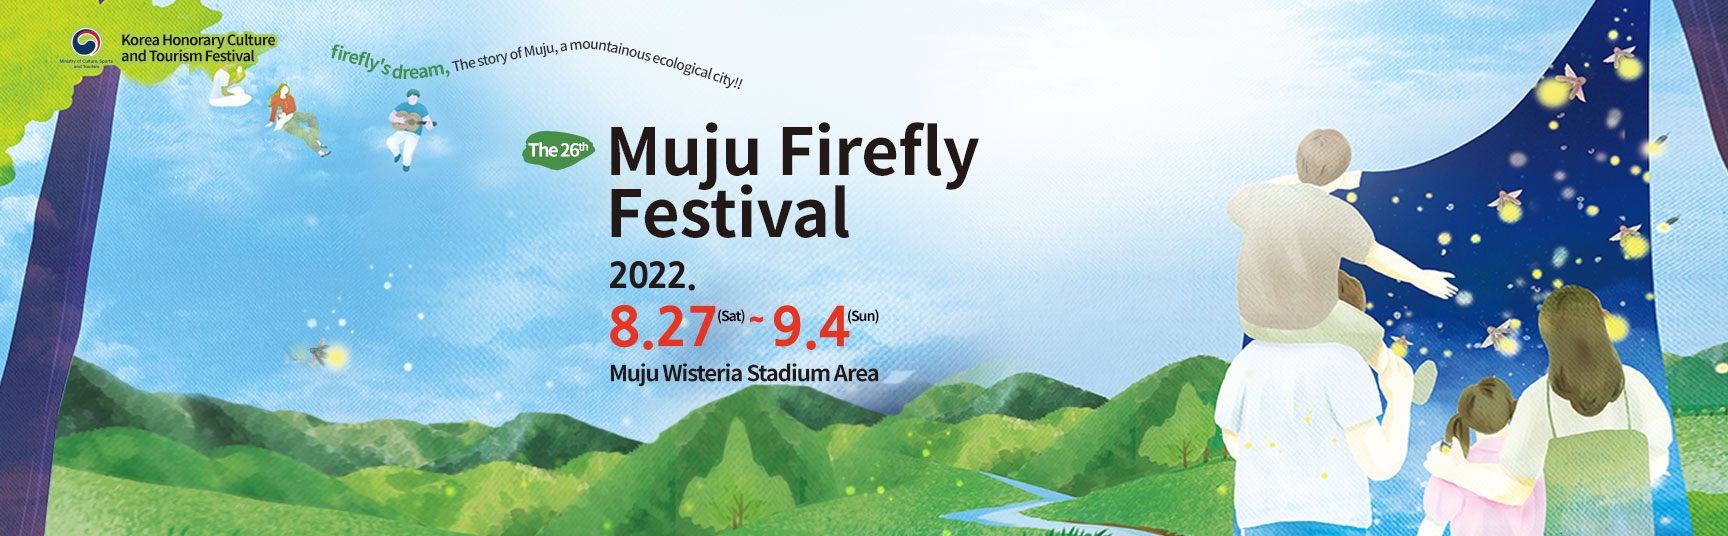 2022 Muju firefly festival